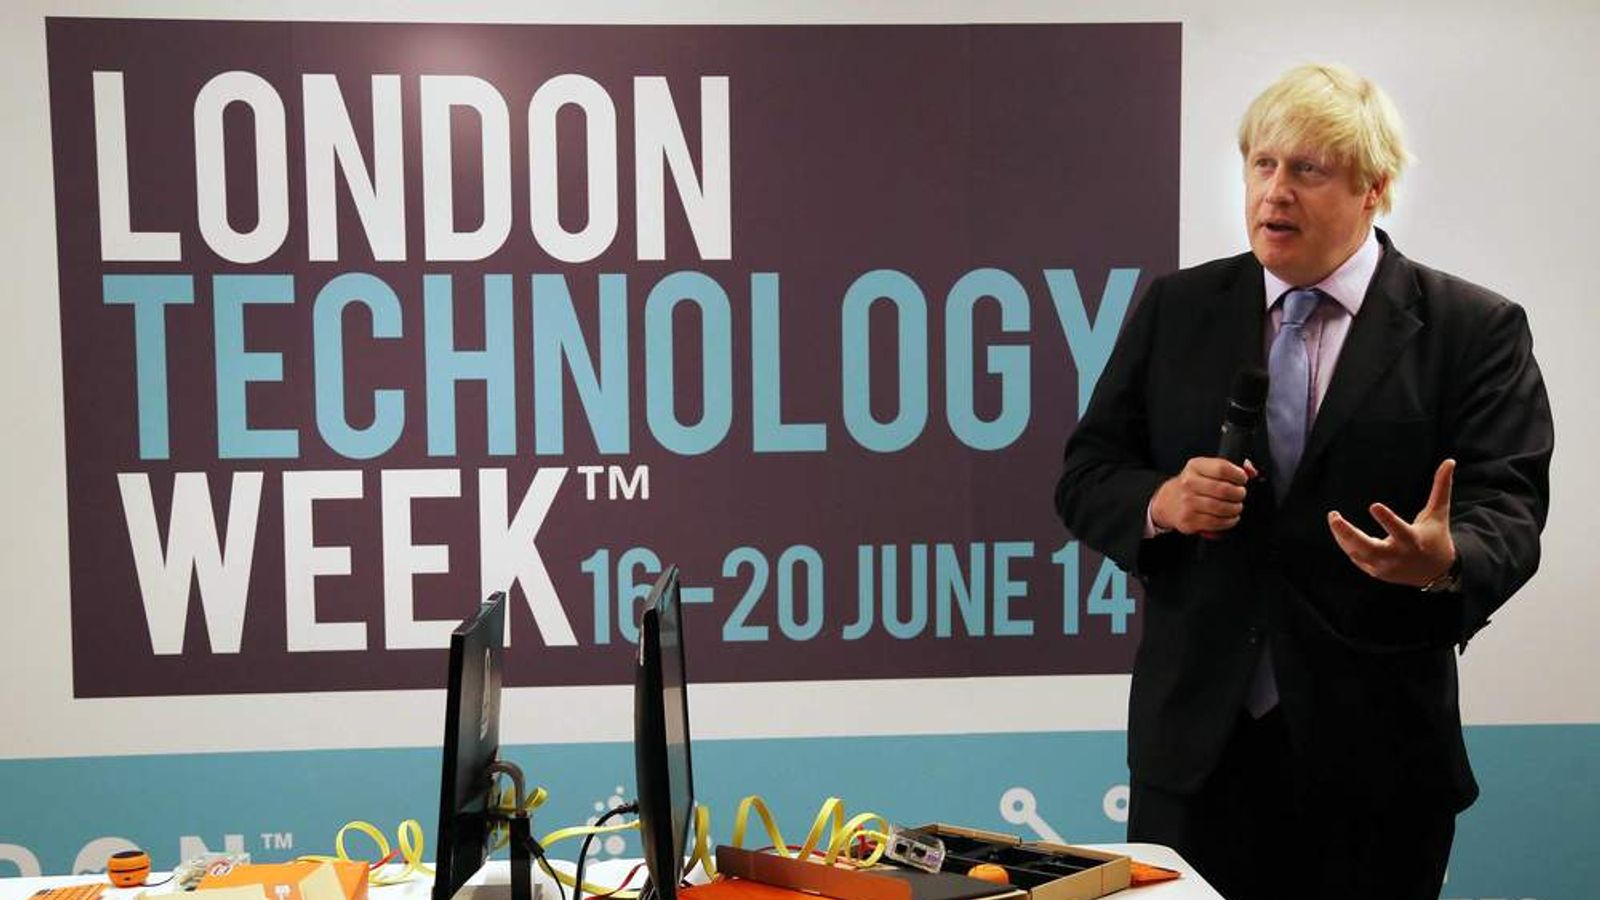 London Tech Week Do The Numbers Add Up? Science & Tech News Sky News